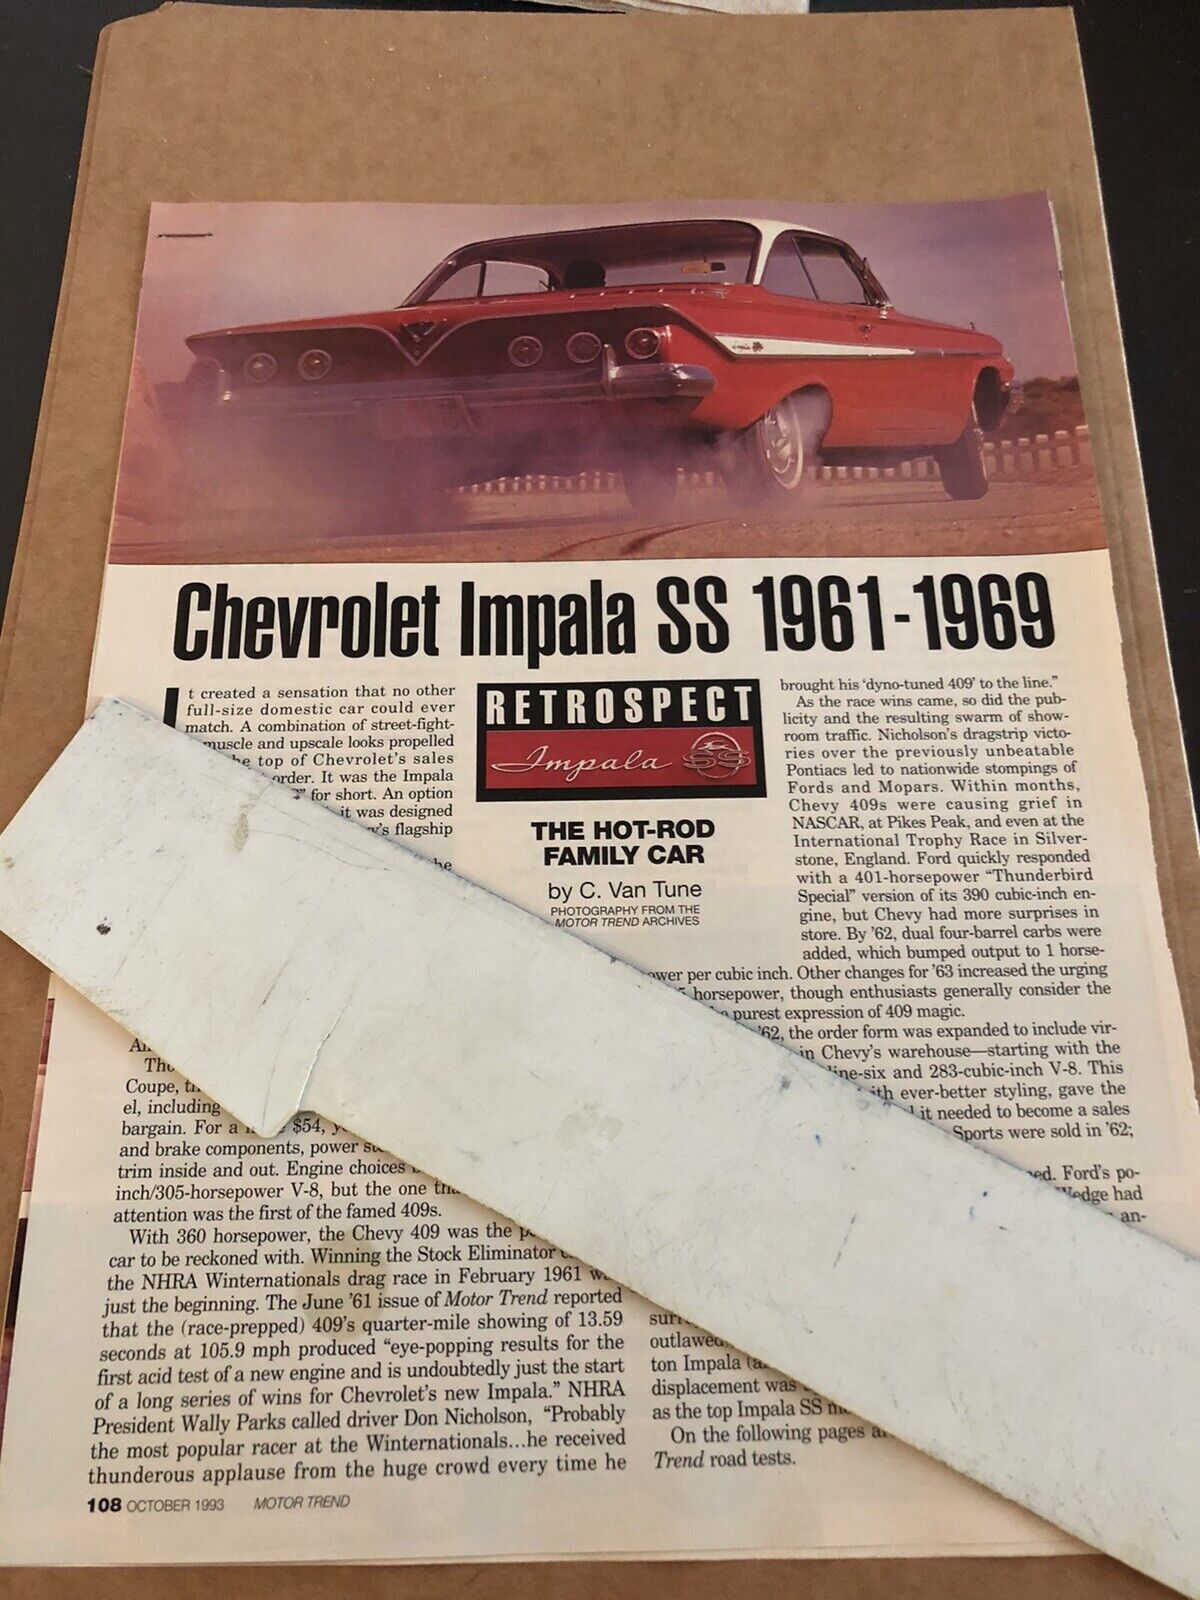 1961 - 1969 1994 CHEVROLET IMPALA ARTICLE